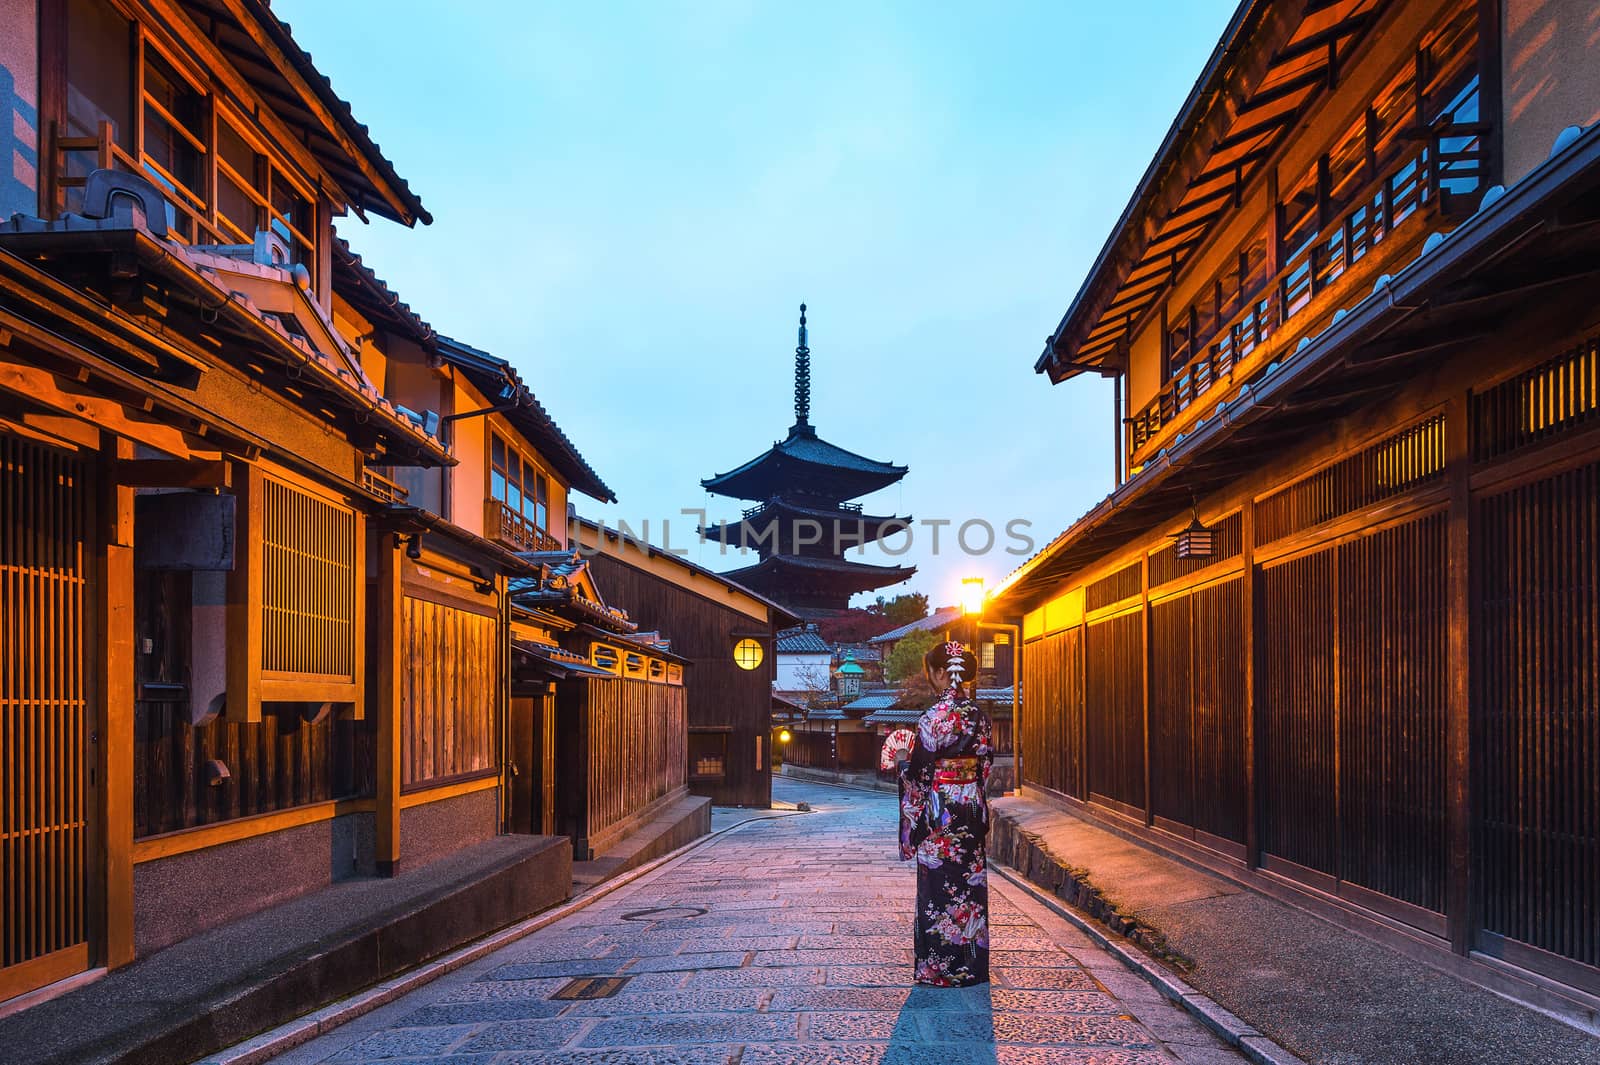 Asian woman wearing japanese traditional kimono at Yasaka Pagoda and Sannen Zaka Street in Kyoto, Japan.